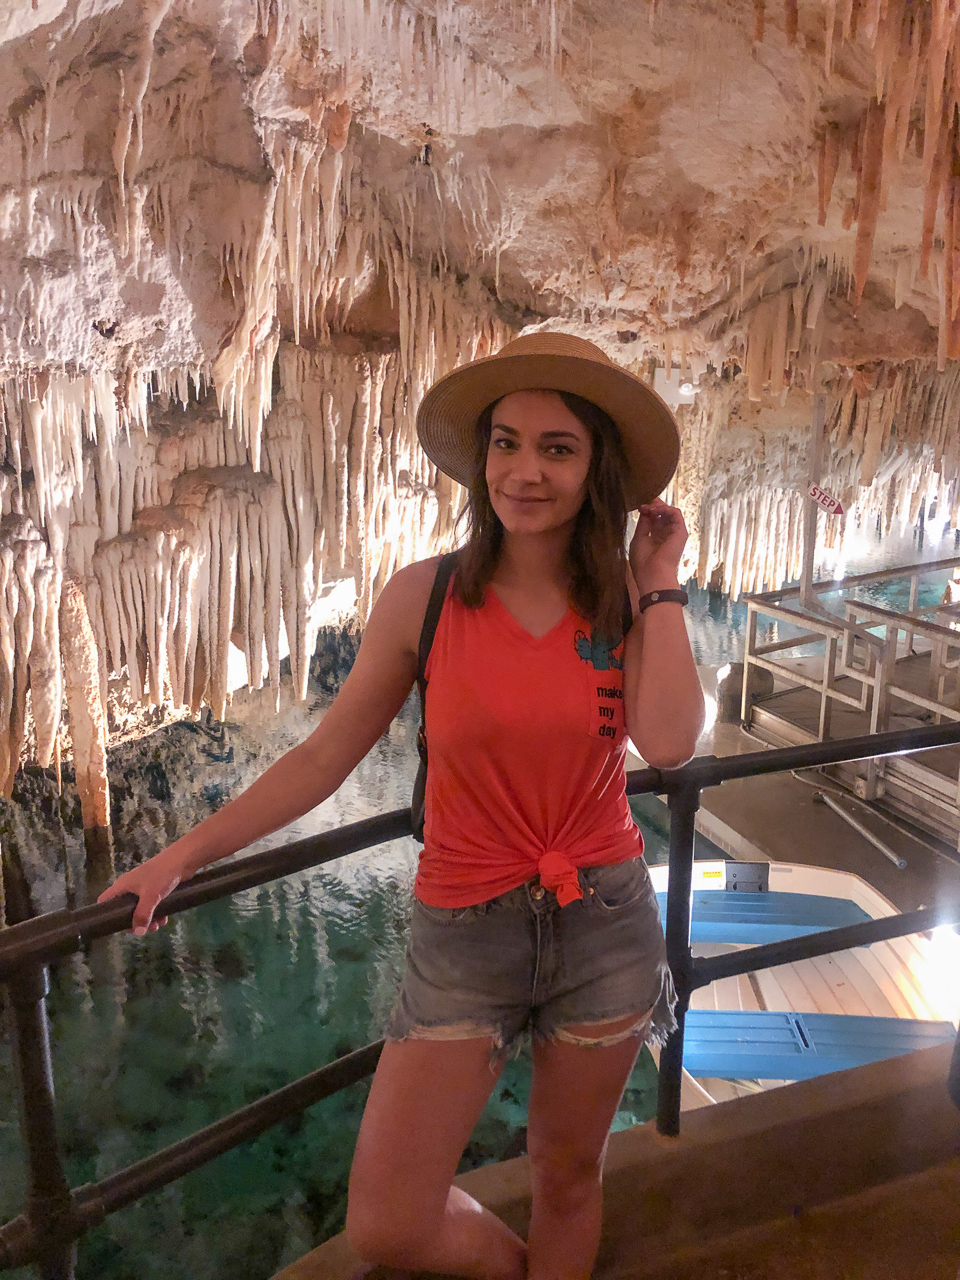 Scenic Caves